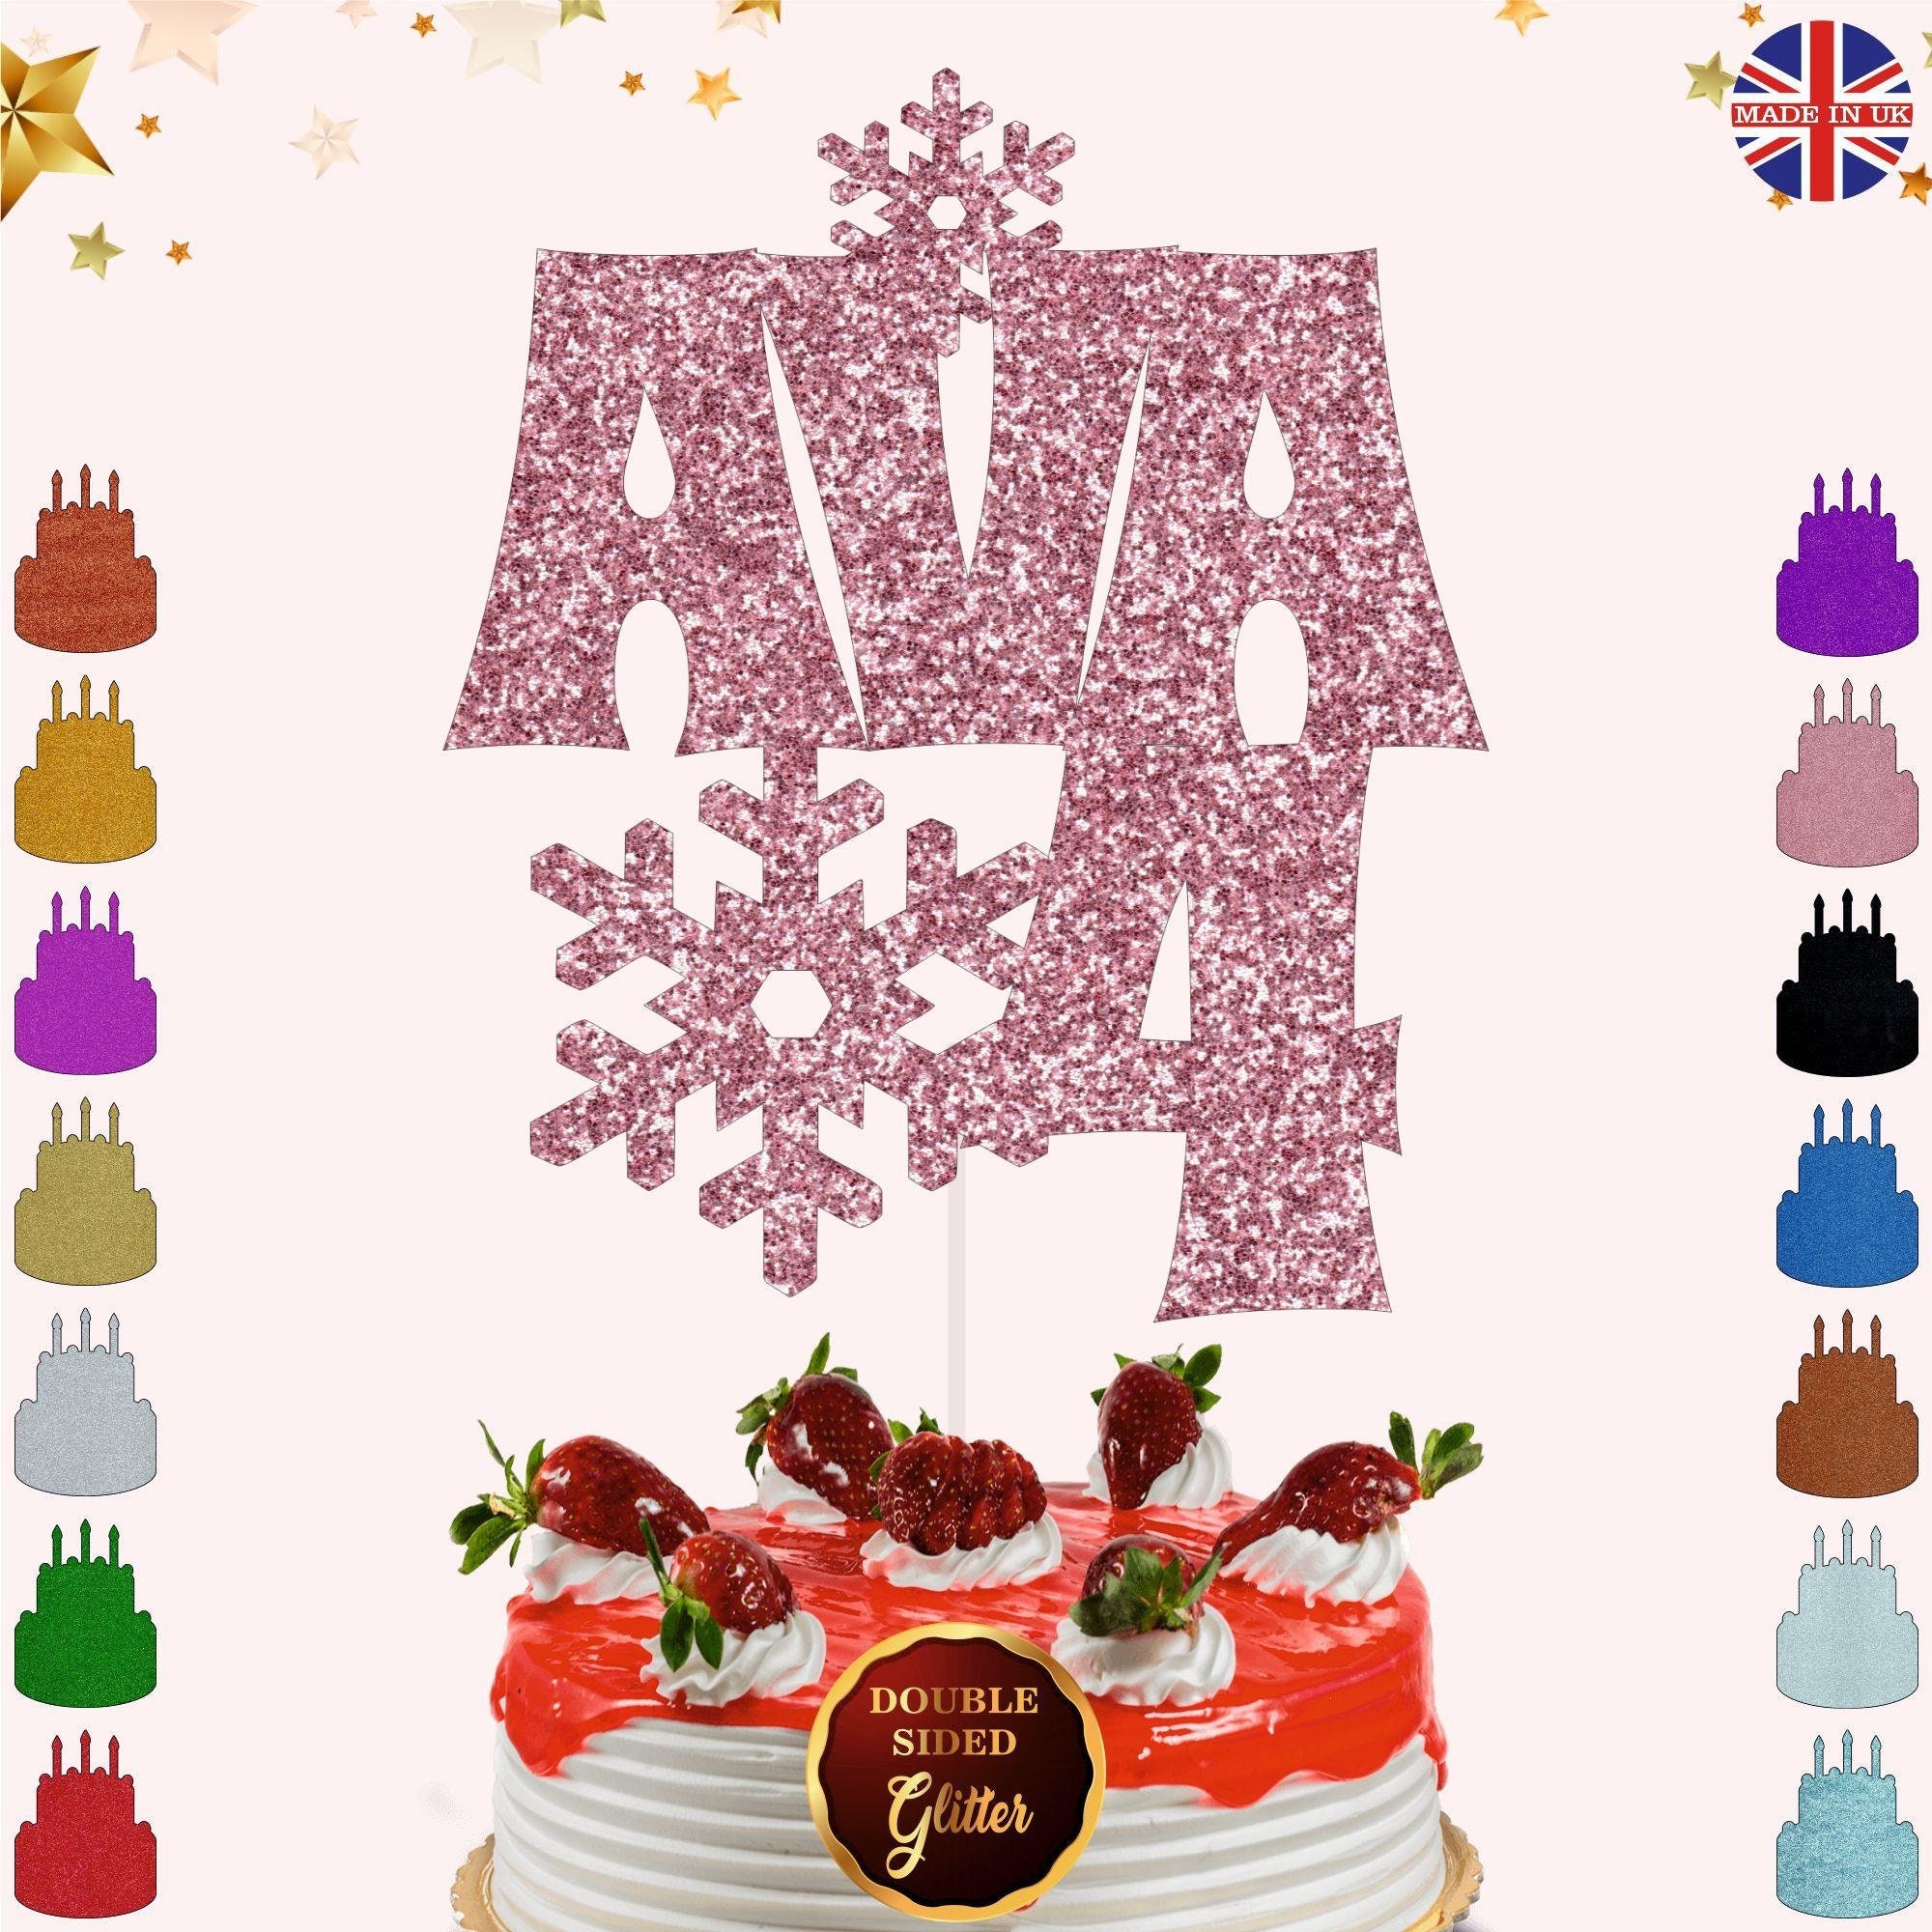 12 Edible Frozen Style Snowflake Cake Decorations. Edible Snowflake Cake  Toppers. Edible Snowflakes. 